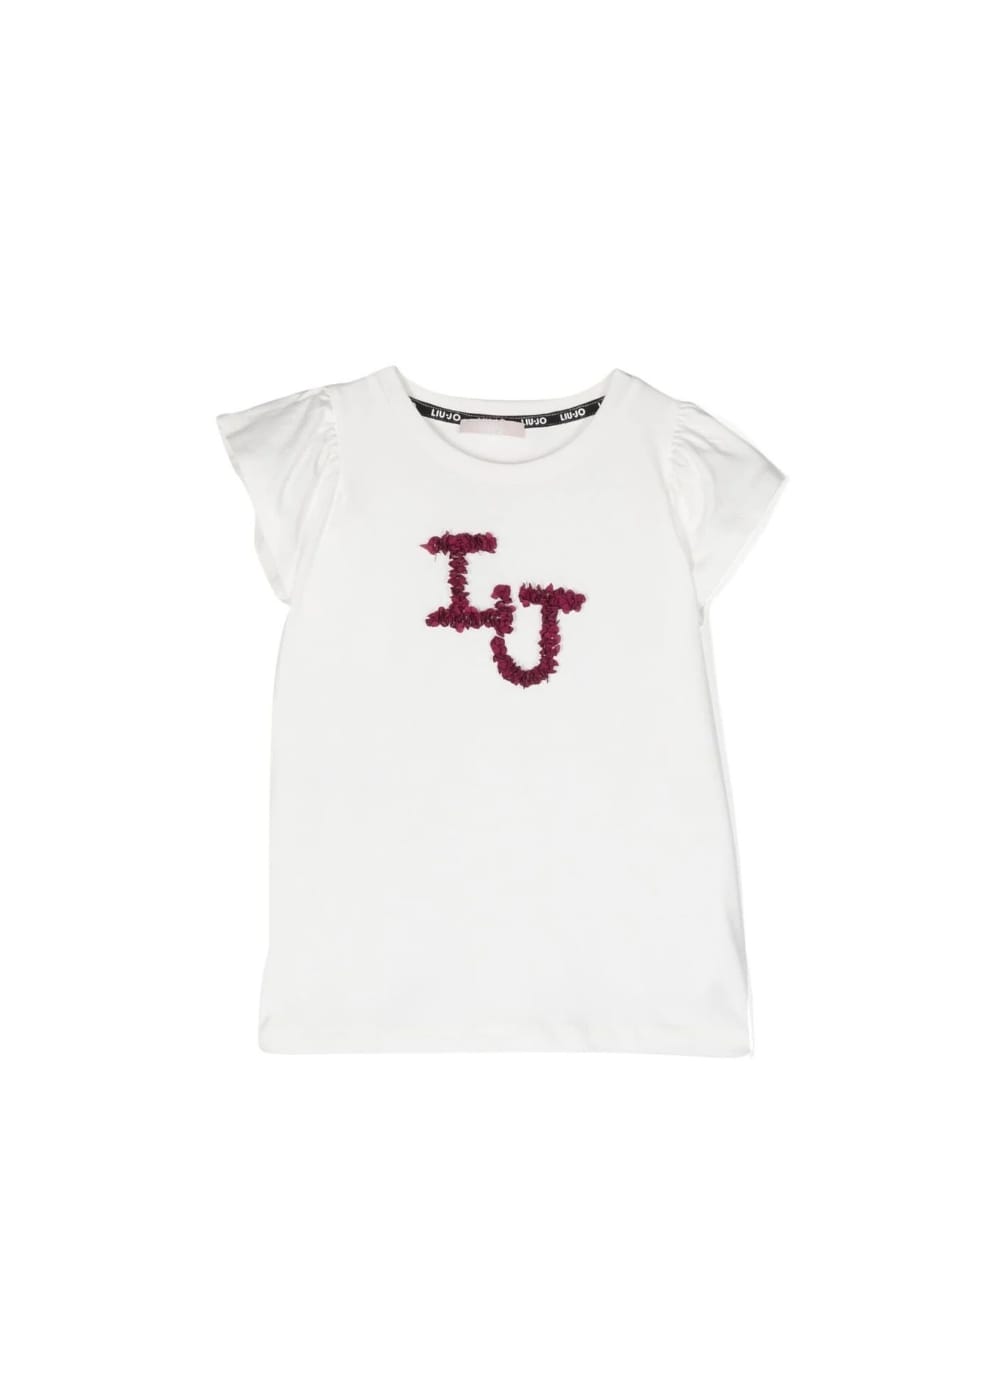 Featured image for “Liu Jo T-shirt con logo petals”